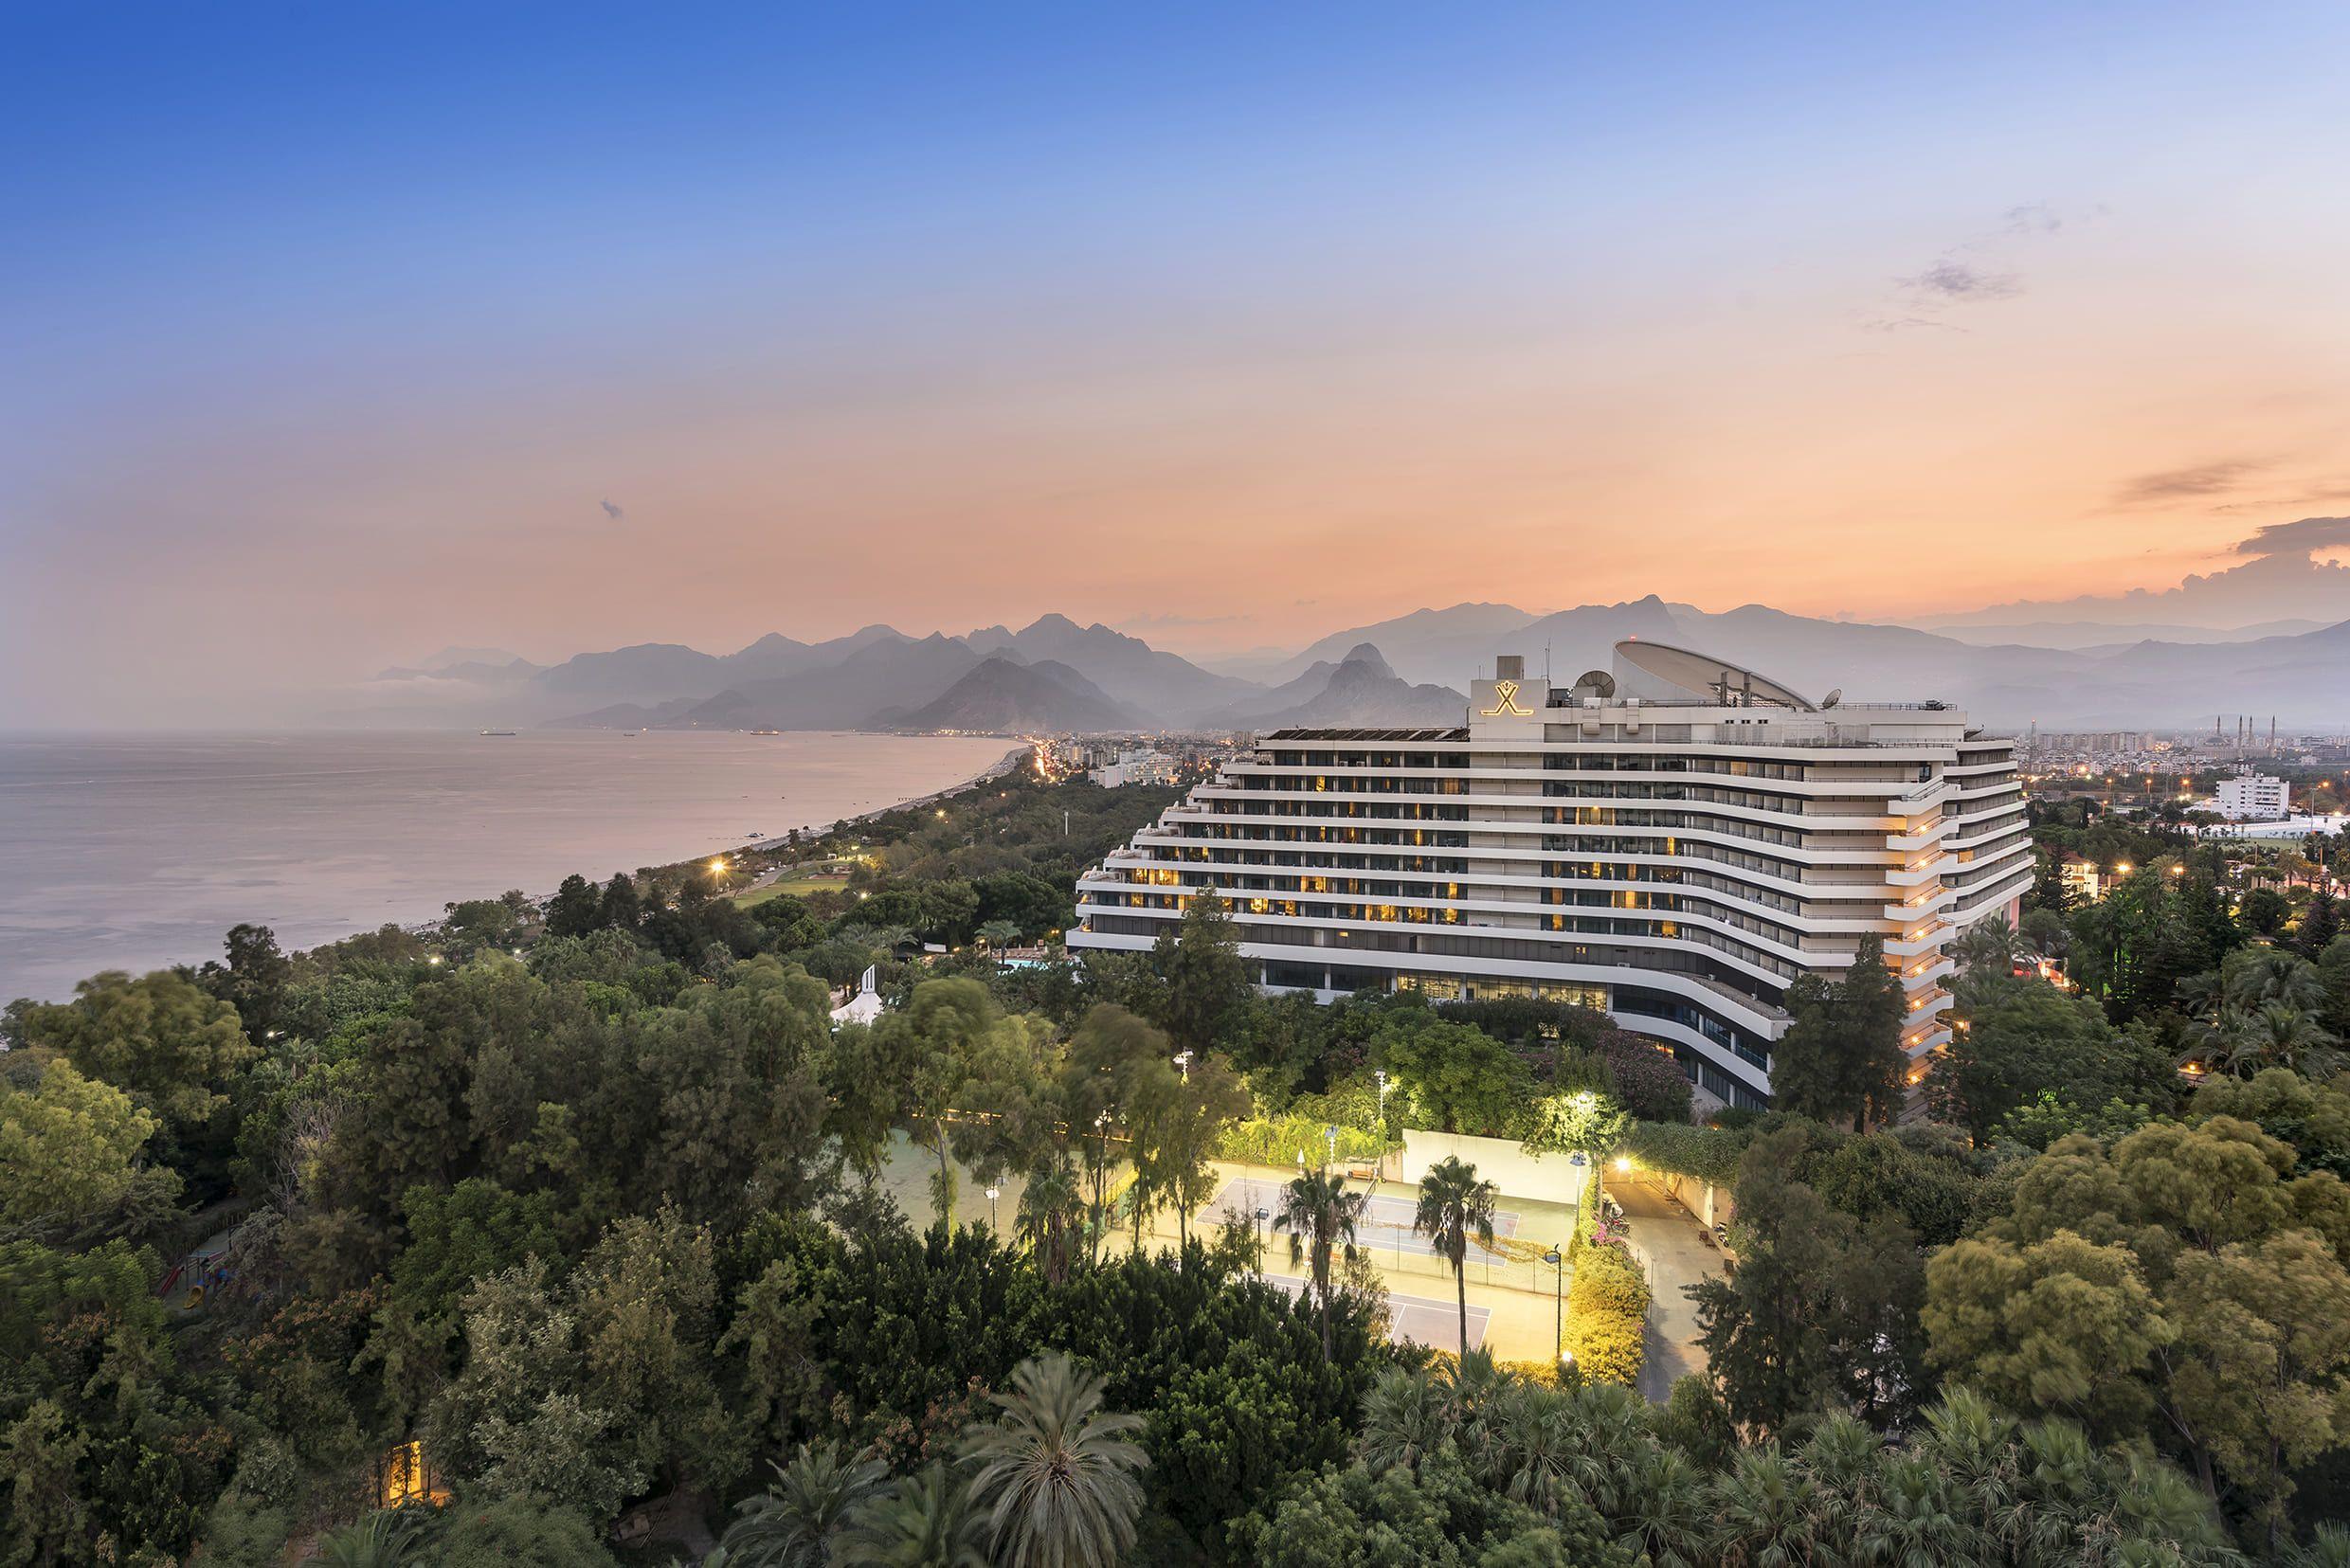 The 10 Best Hotels in Antalya, Turkey